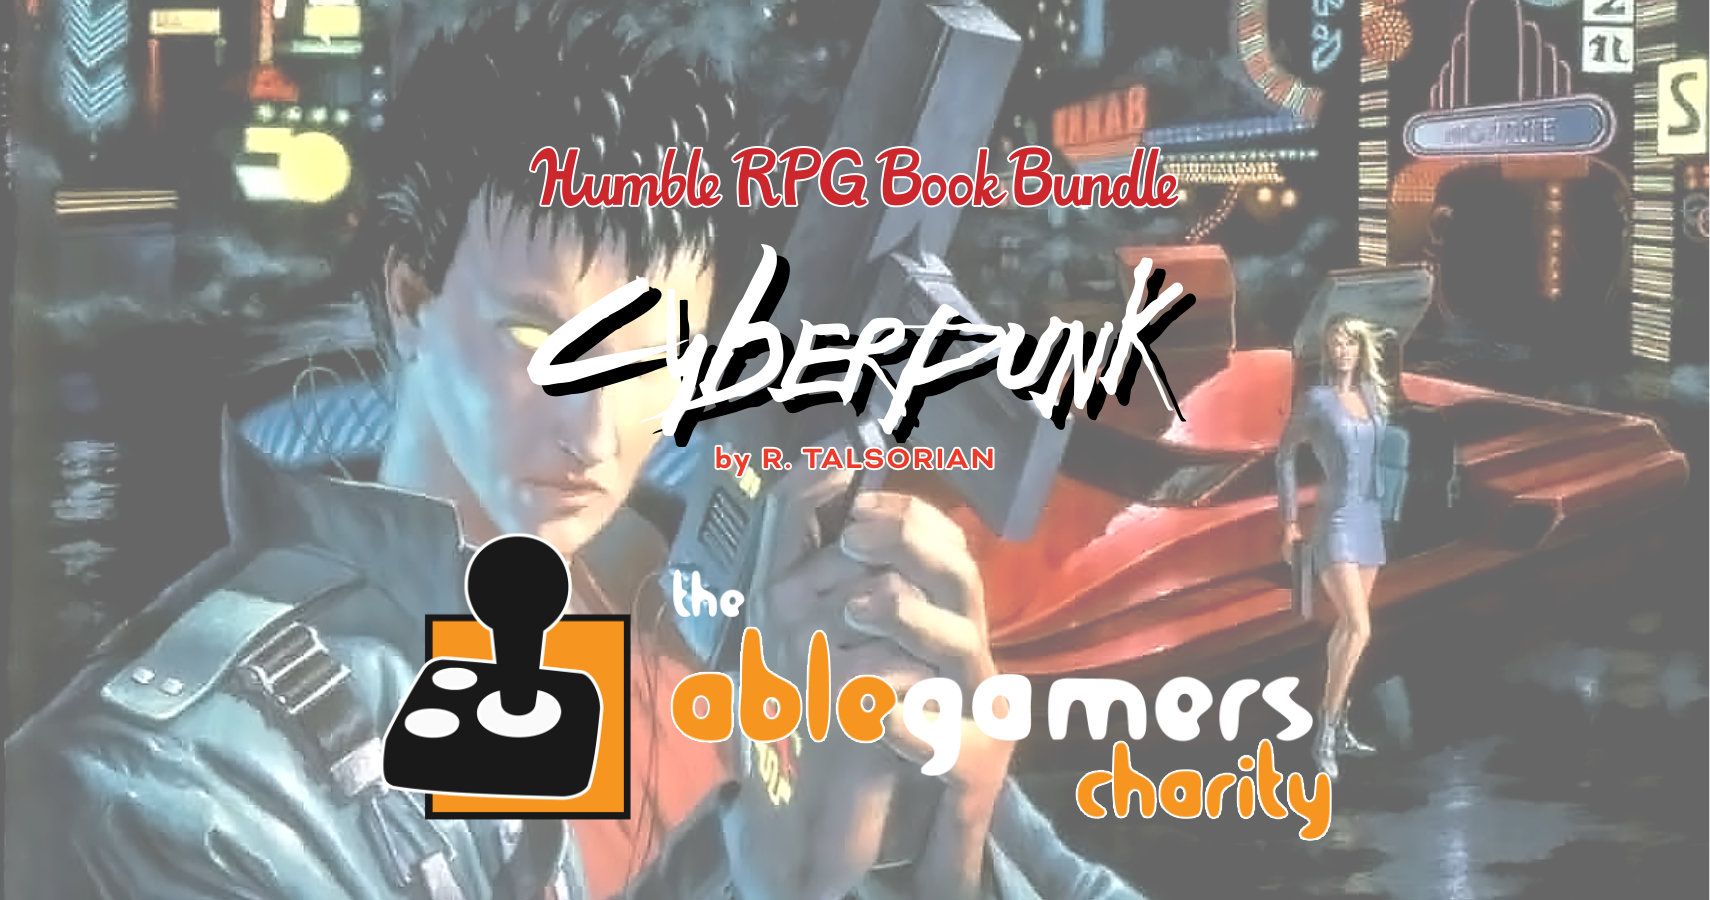 Humble RPG Book Bundle Cyberpunk Is Raising Money For AbleGamers